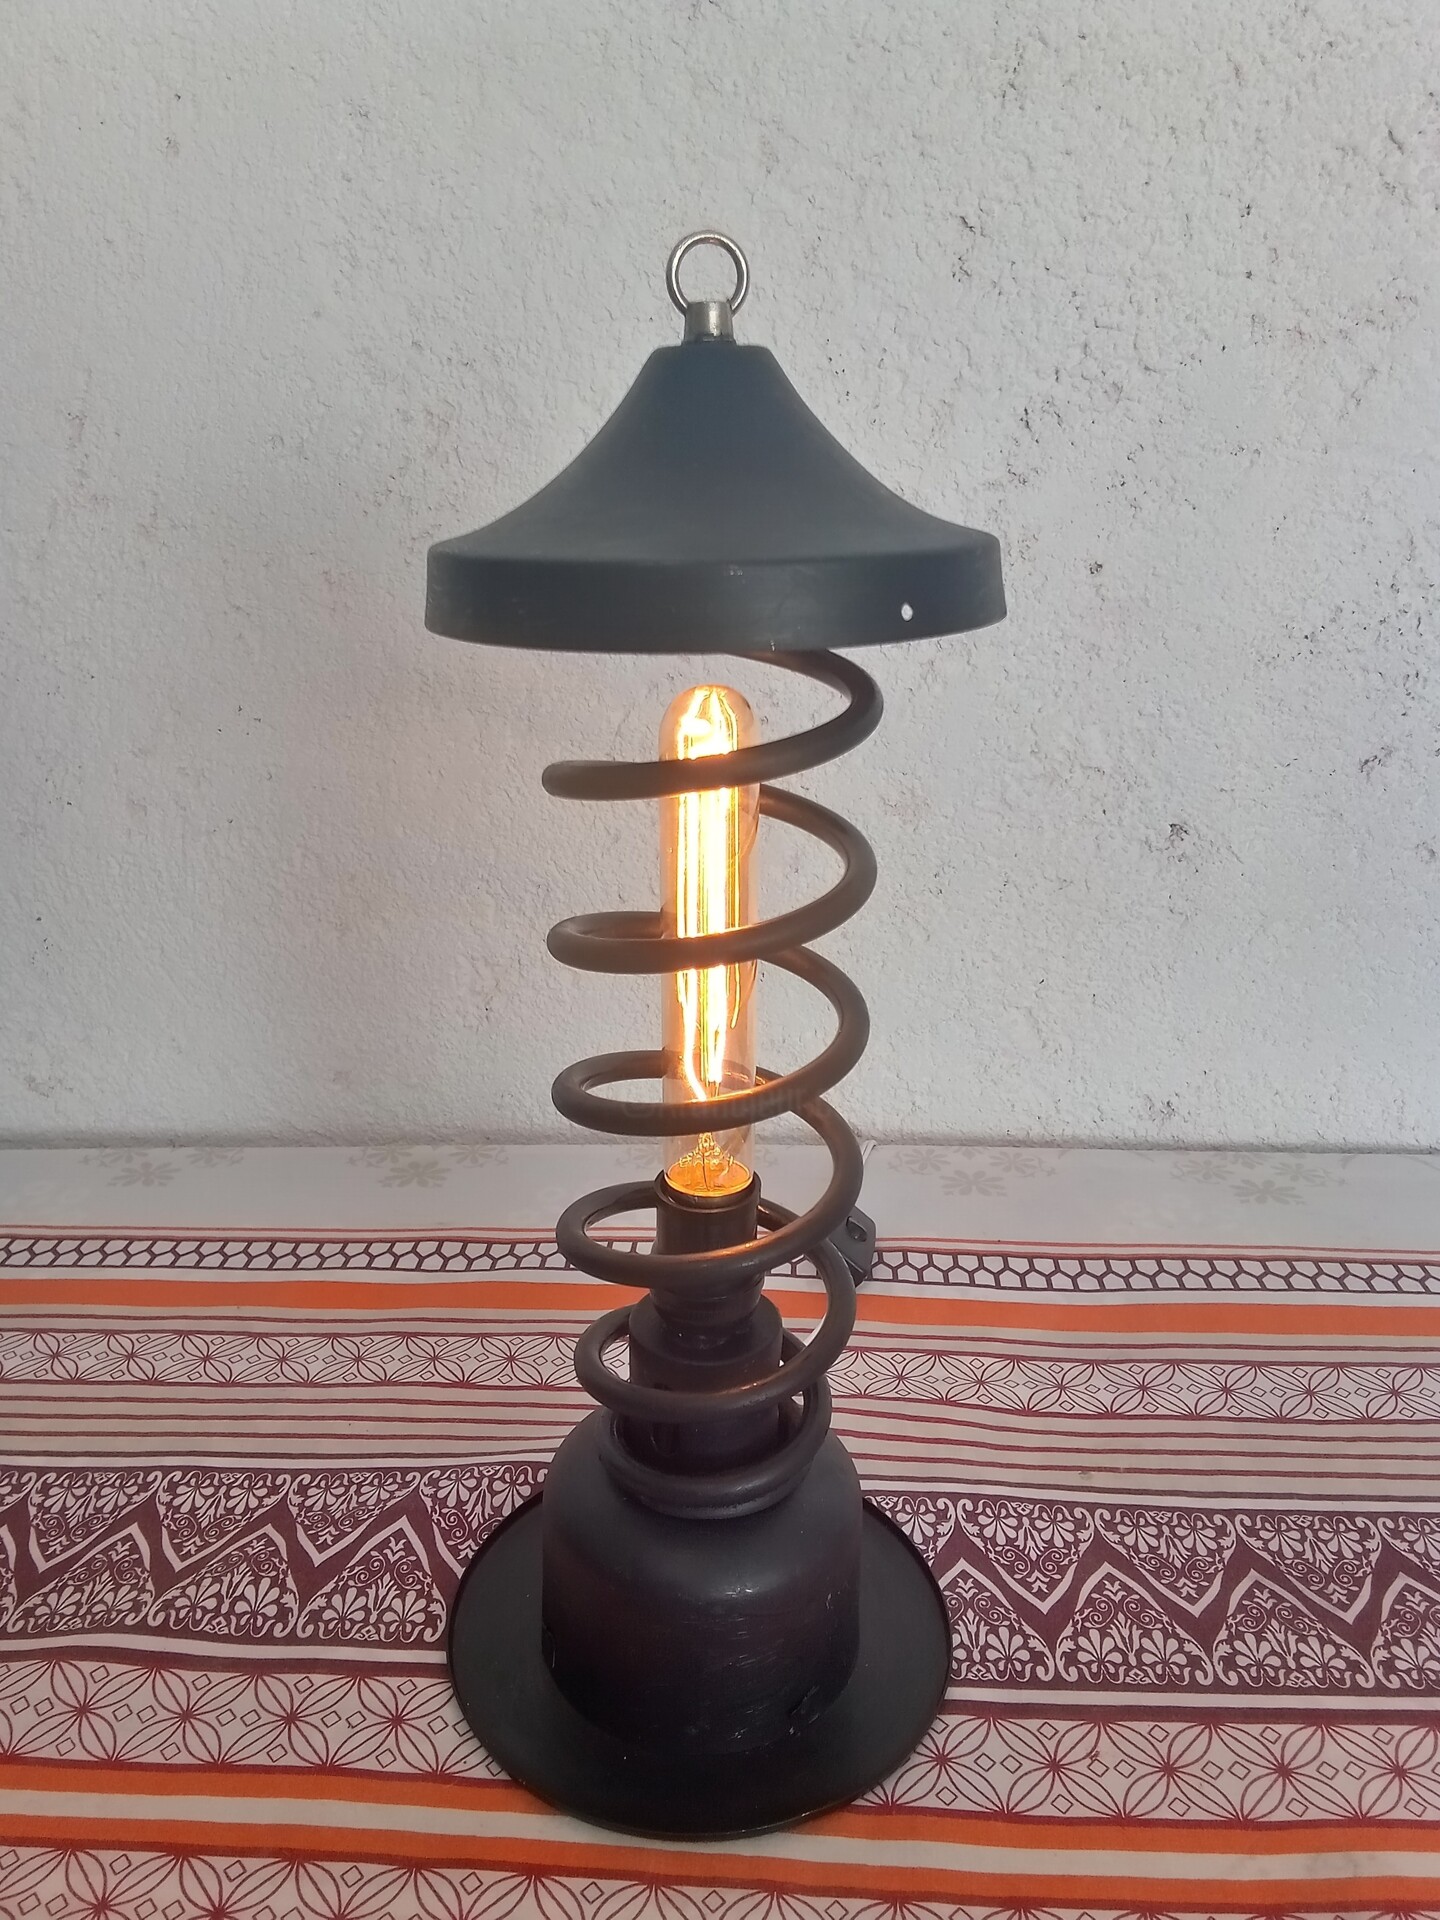 ontmoeten Birma ring Spin-Lamp, Design by Calavera Estudio Dgo Mx | Artmajeur